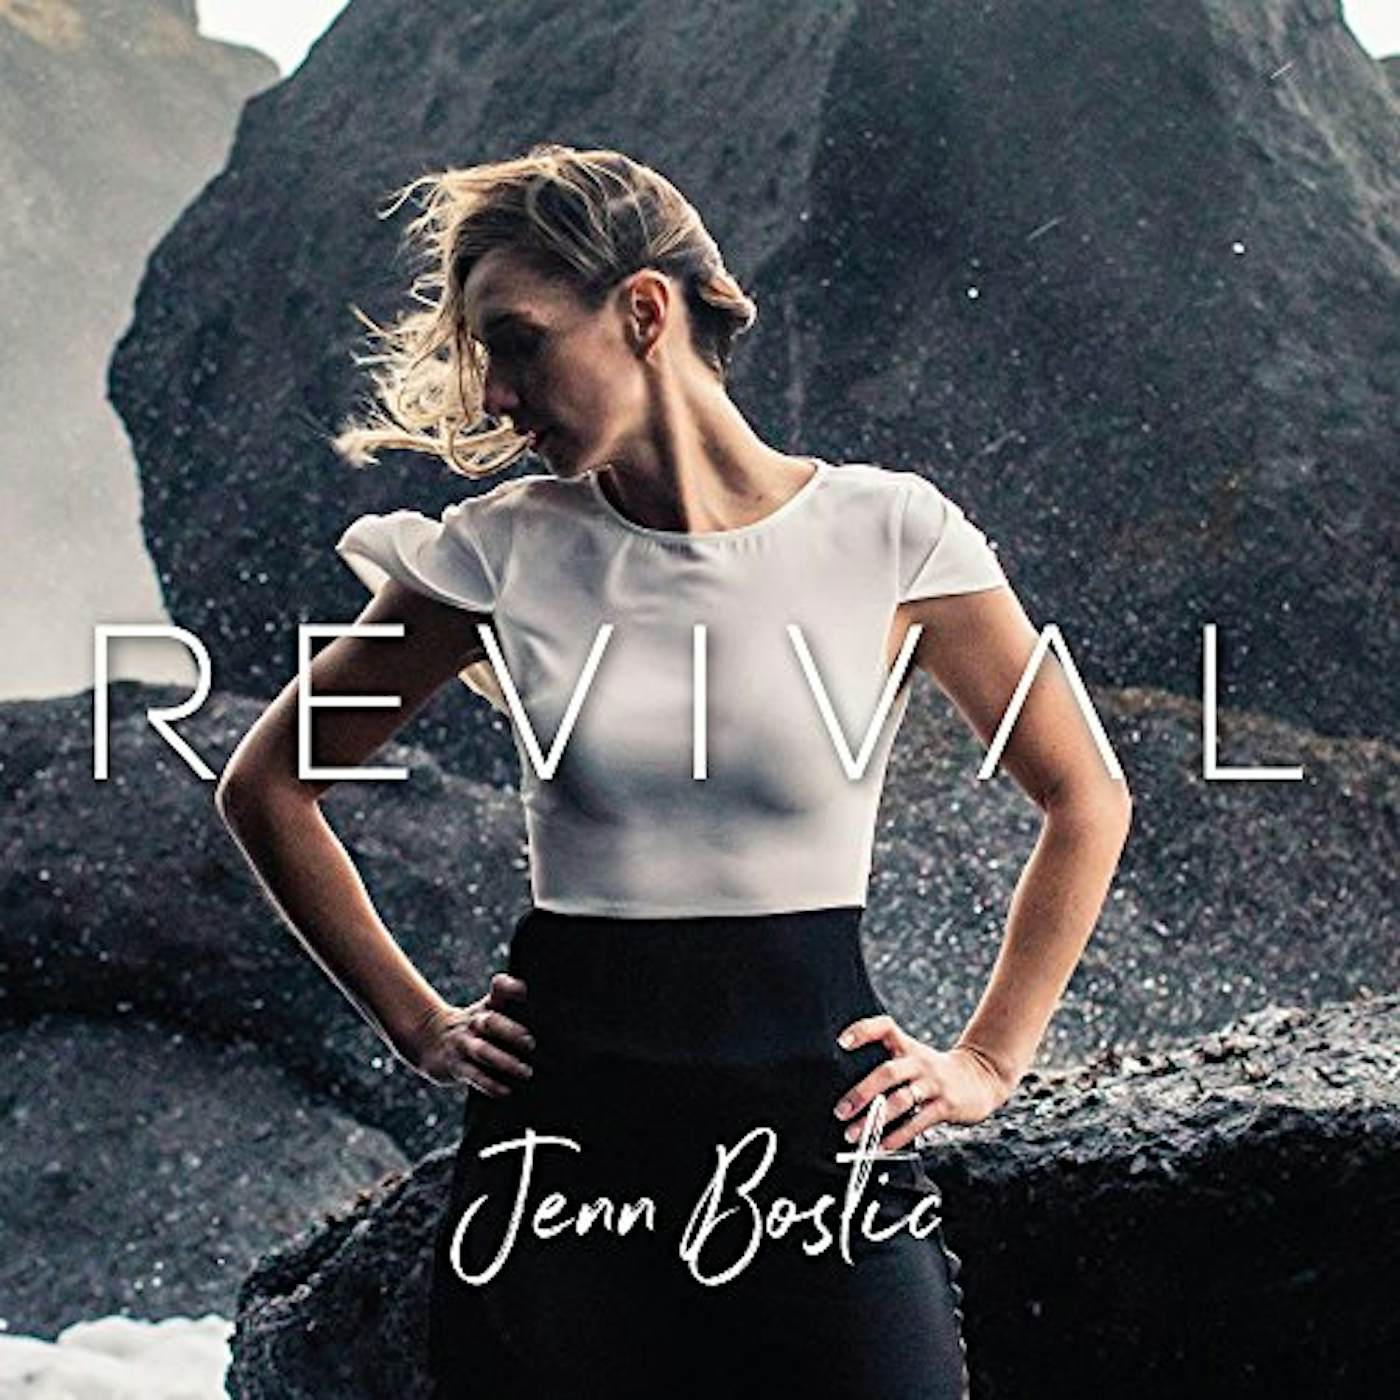 Jenn Bostic REVIVAL CD